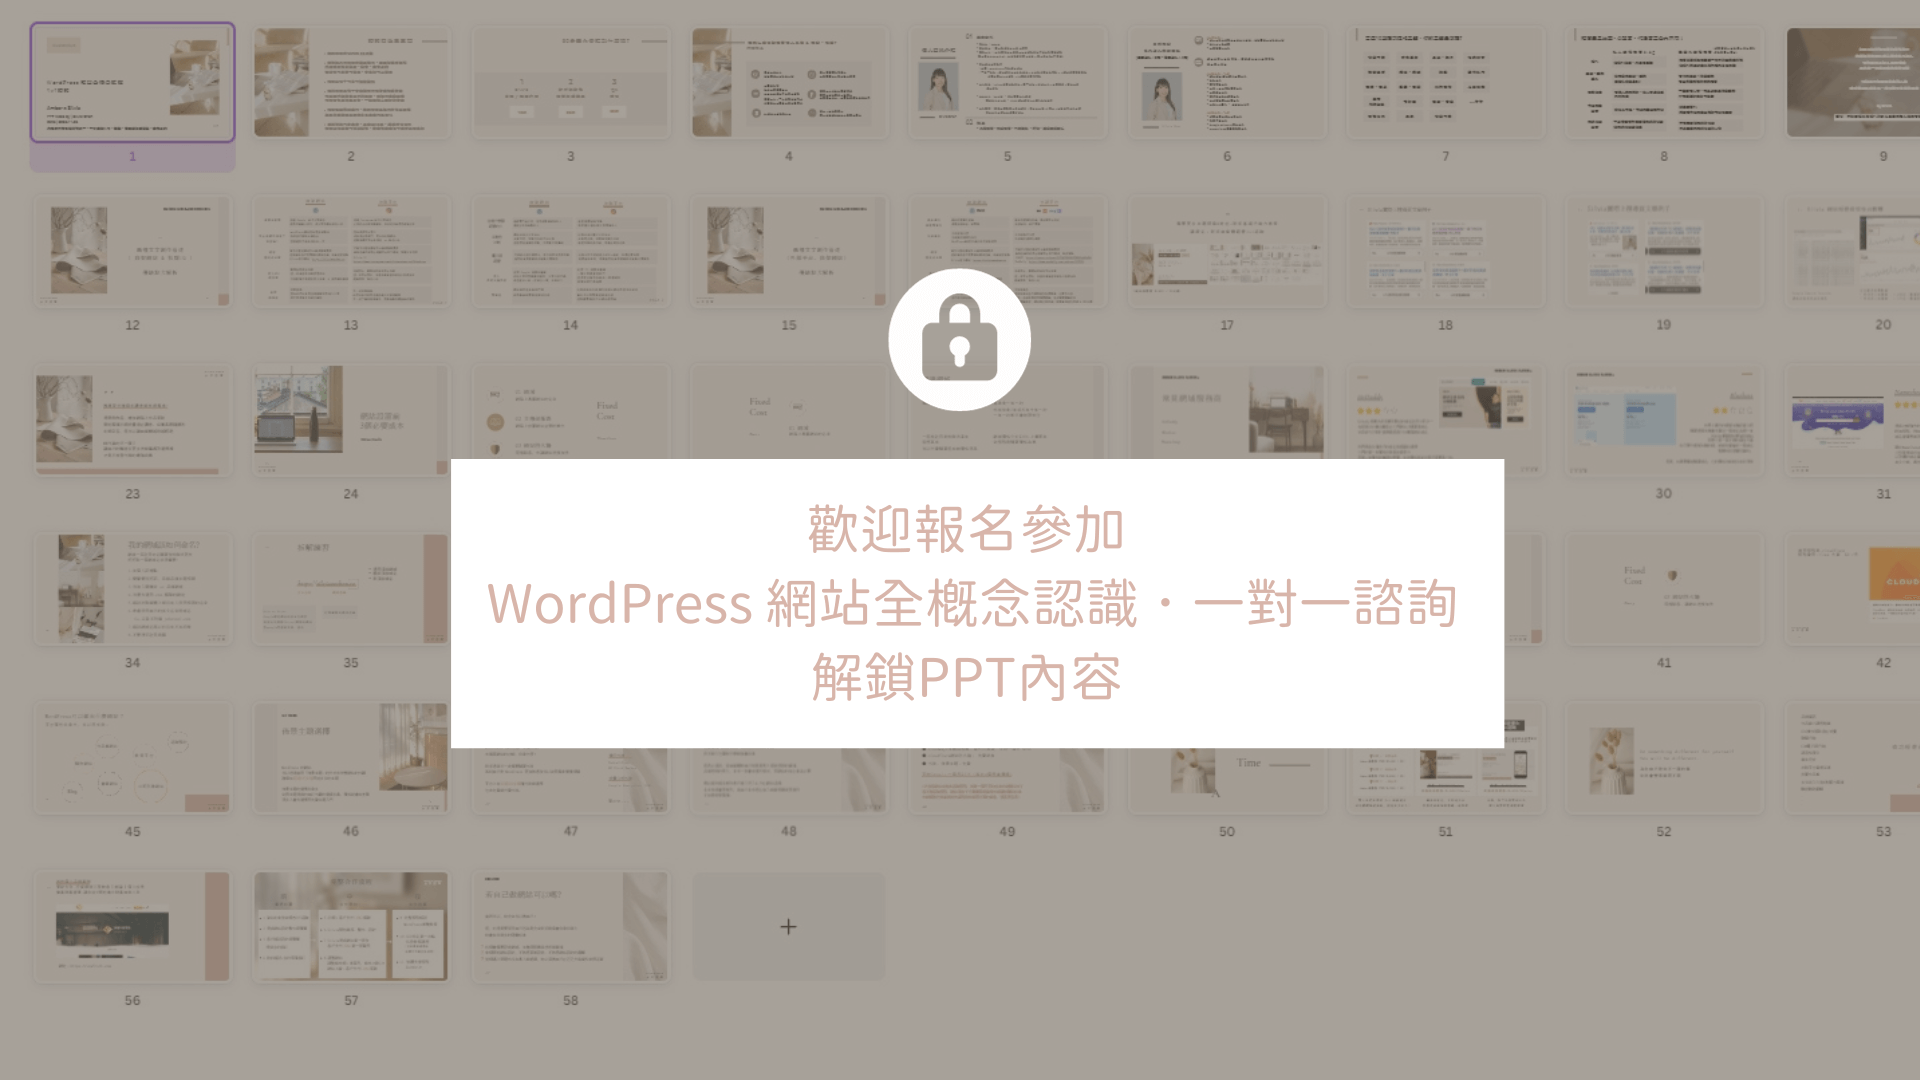 WordPress 網站全概念認識．一對一諮詢 PPT內容解鎖